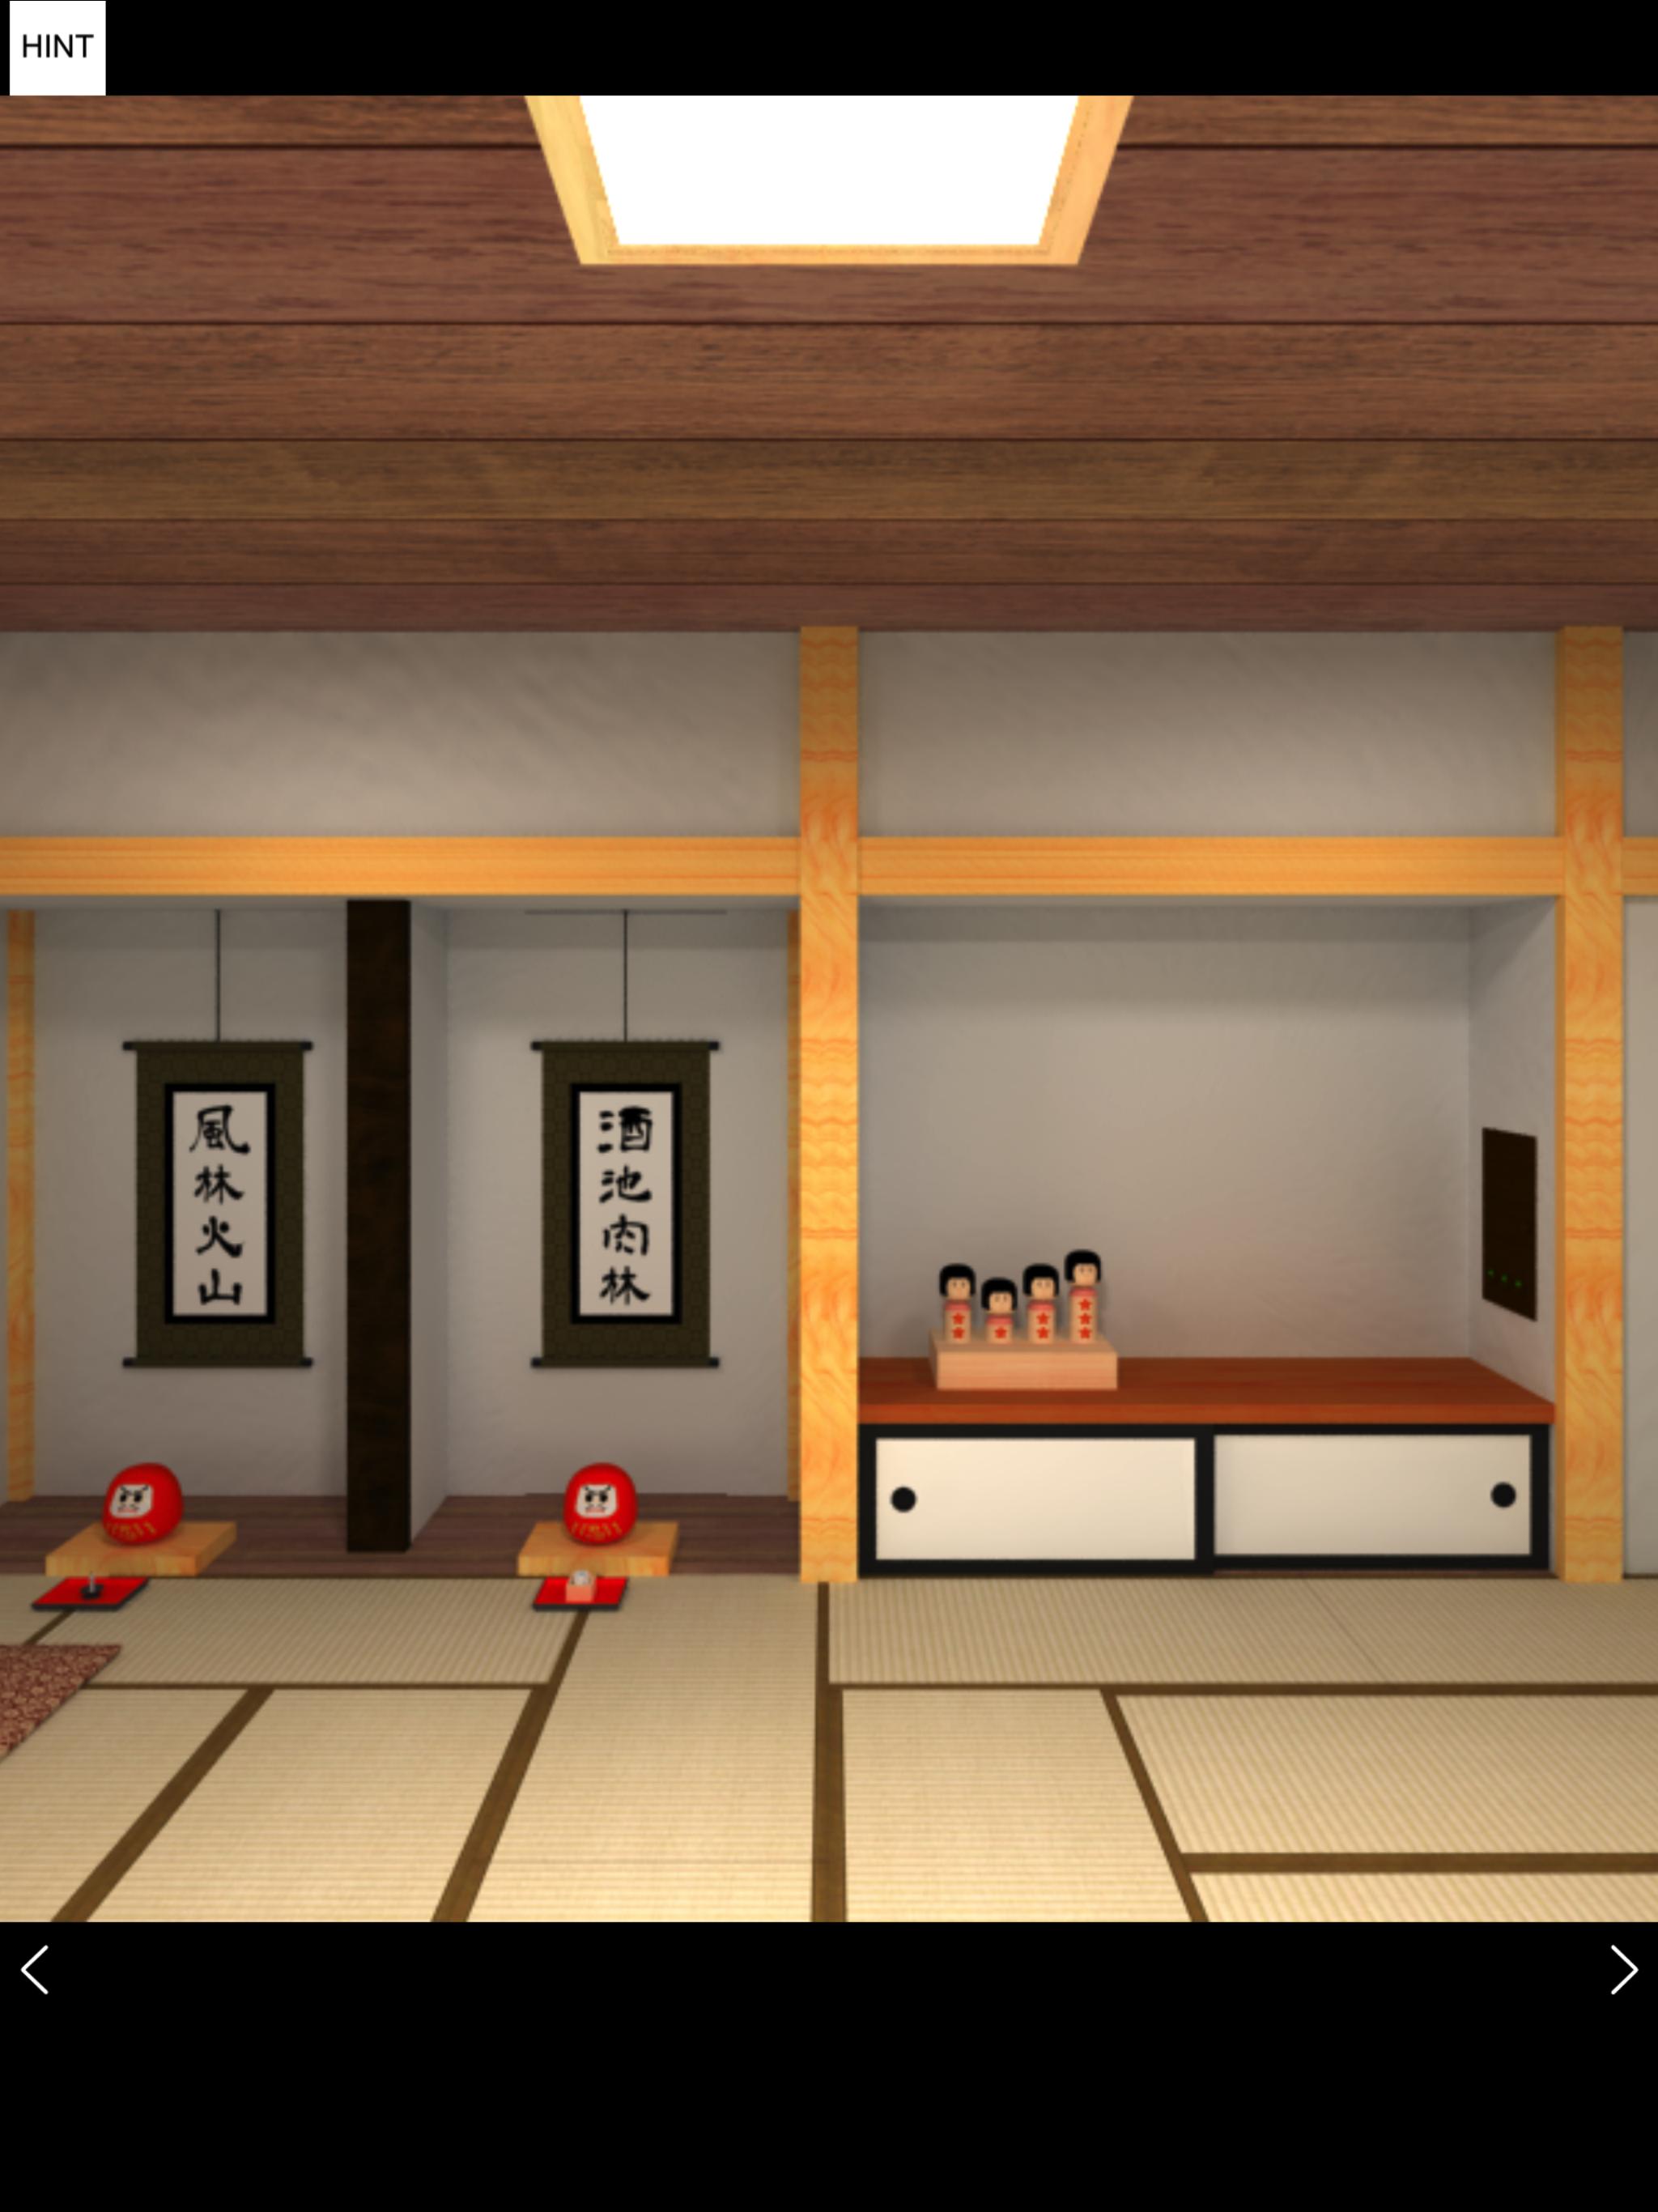 Escape room android. Комната ниндзя. Комната для фотошопа. Пустая японская комната. The Room на андроид.